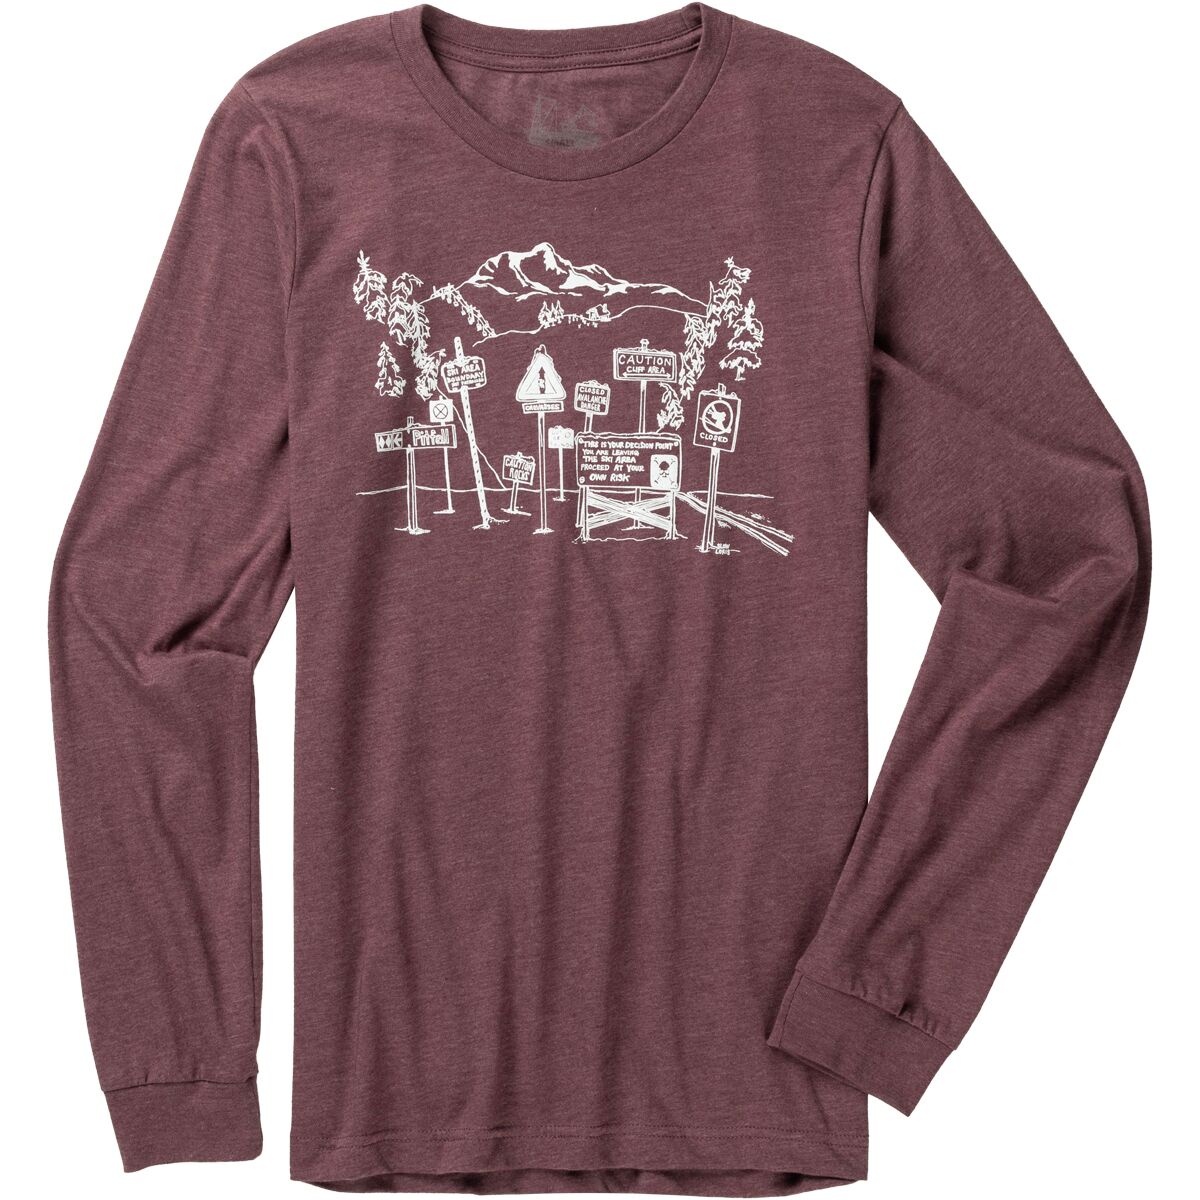 Backcountry Long-Sleeve T-Shirt - Men